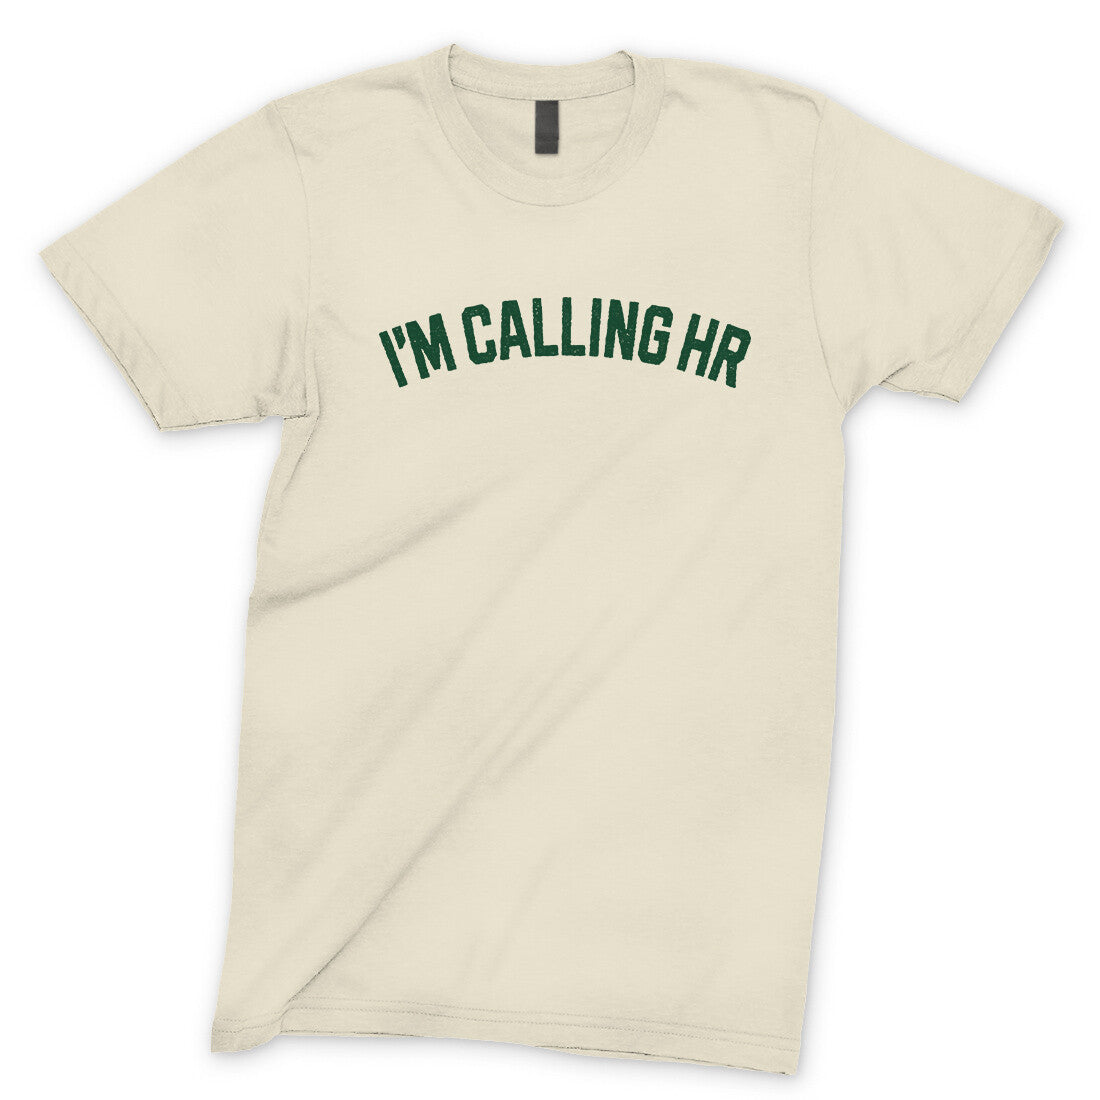 I'm Calling HR in Natural Color